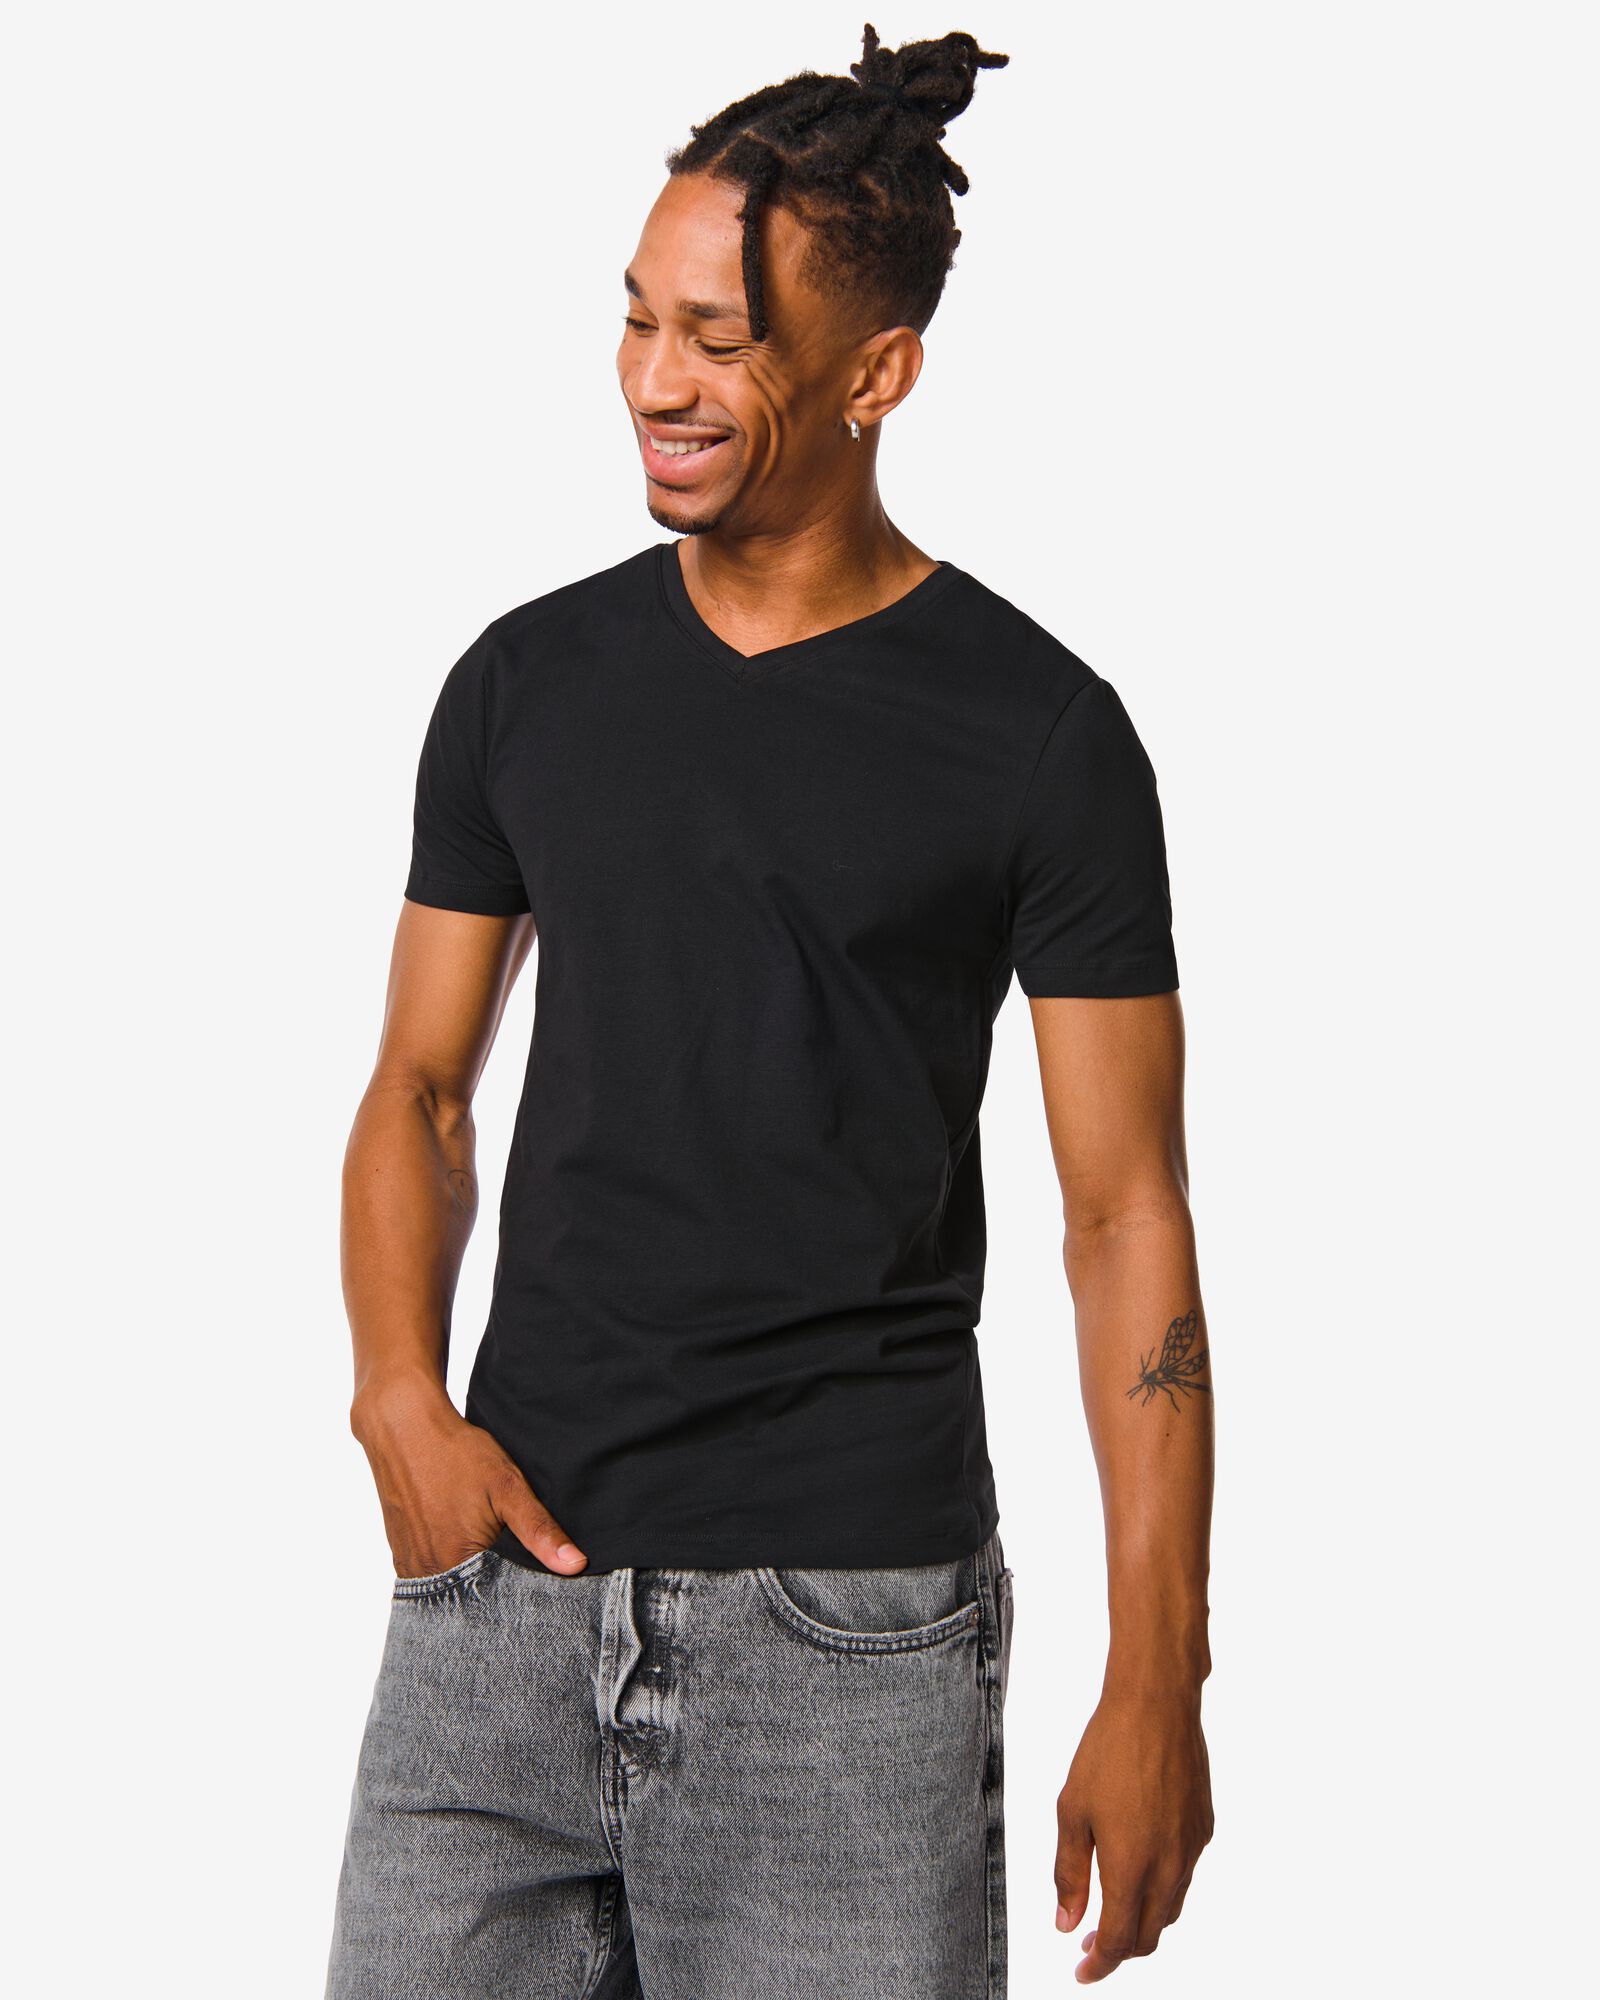 Image of HEMA Heren T-shirt Slim Fit V-hals Zwart (zwart)